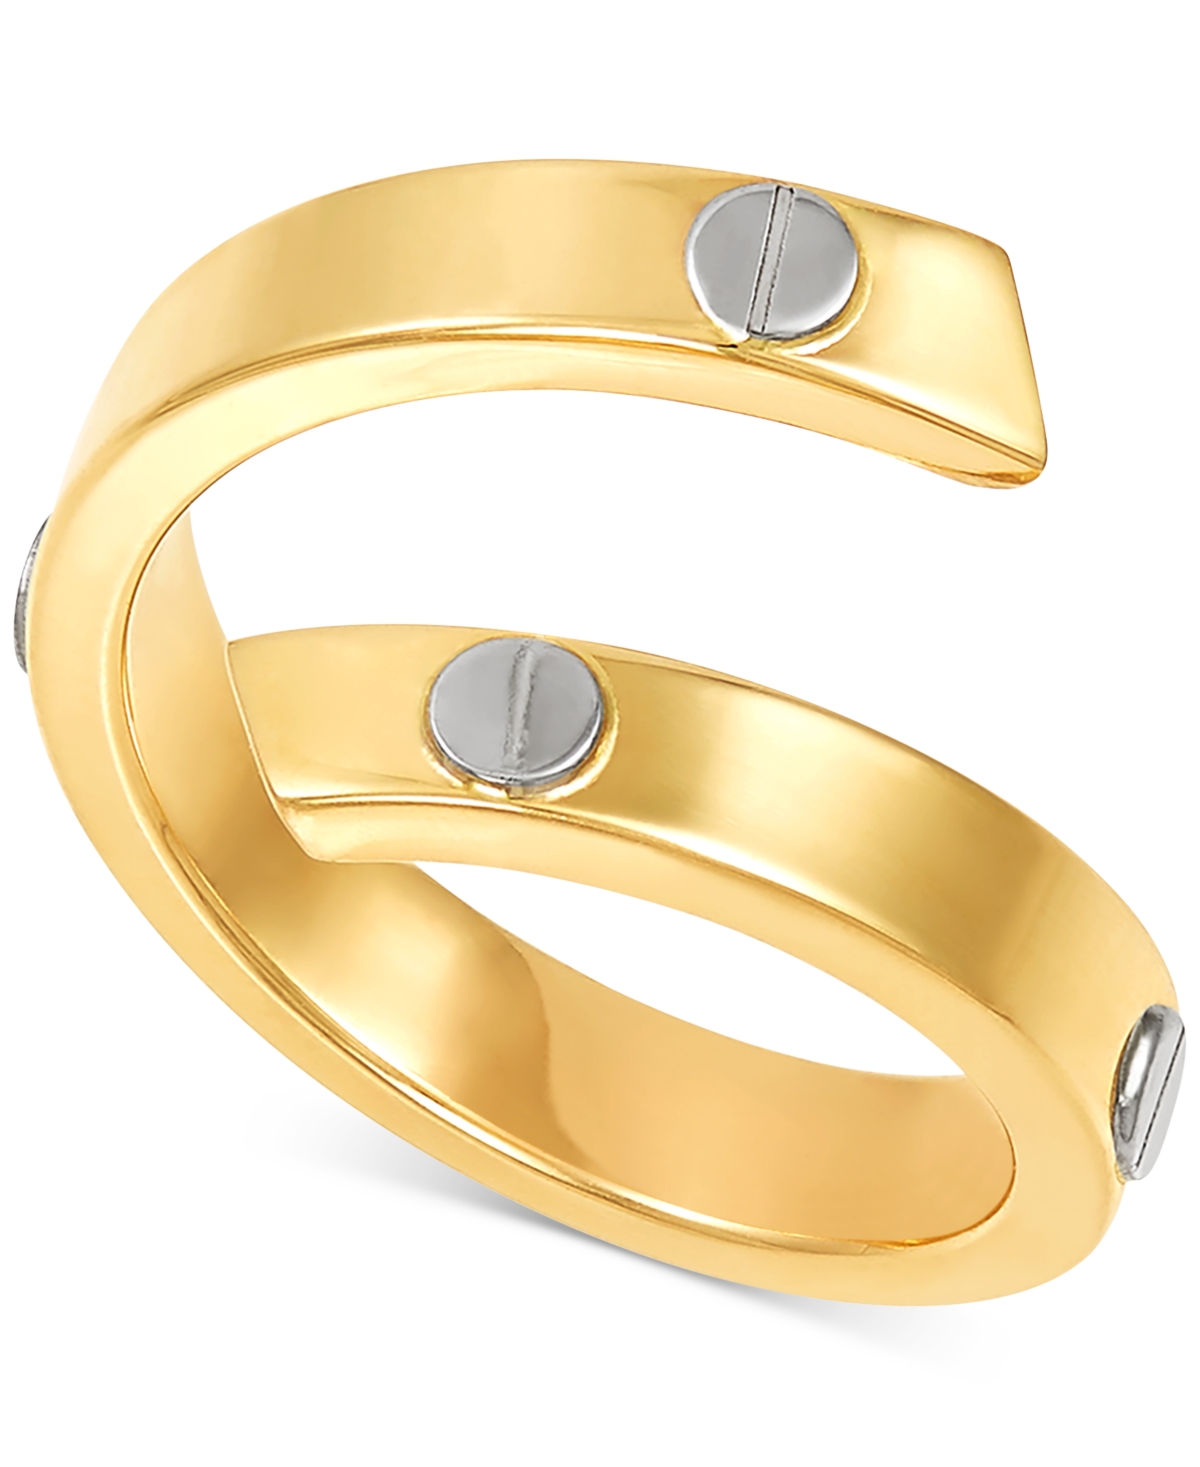 Rivet Coil Statement Ring in 10k Gold & White Gold - Gold